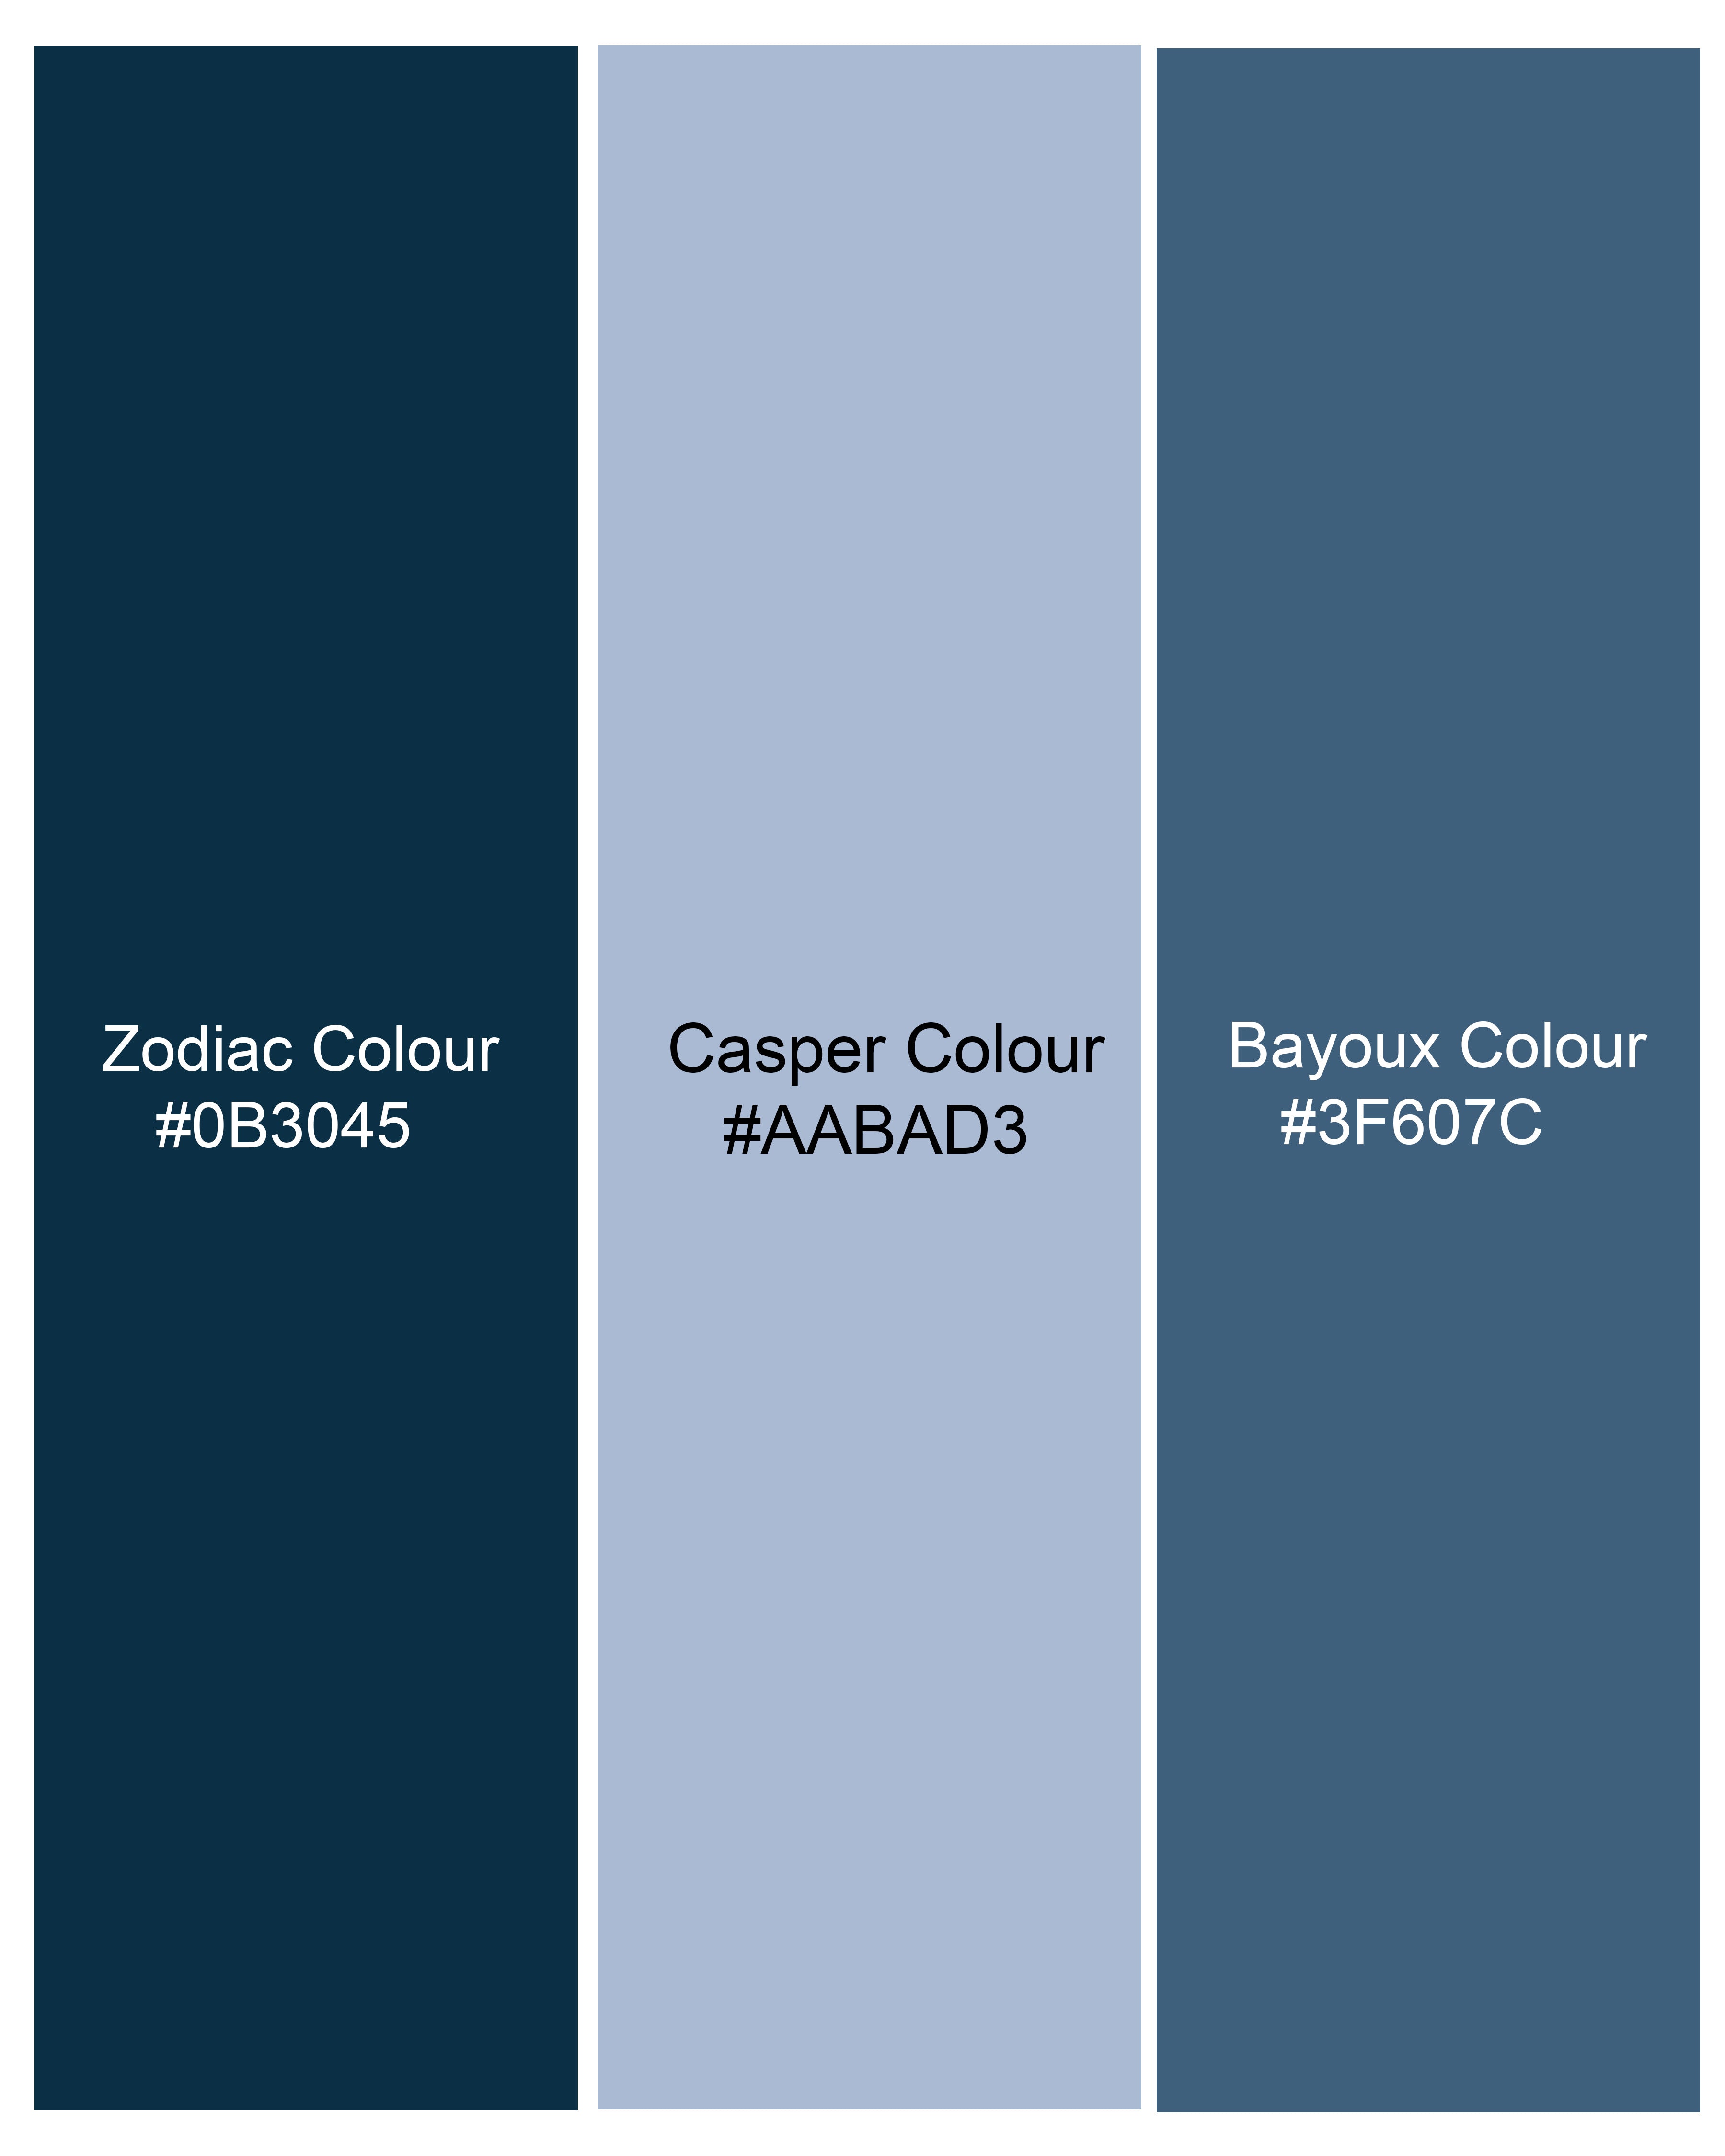 Zodiac Blue Multicolour Striped Dobby Textured Half-Sleeved Shirt 9668-CC-SS-38, 9668-CC-SS-39, 9668-CC-SS-40, 9668-CC-SS-42, 9668-CC-SS-44, 9668-CC-SS-46, 9668-CC-SS-48, 9668-CC-SS-50, 9668-CC-SS-52